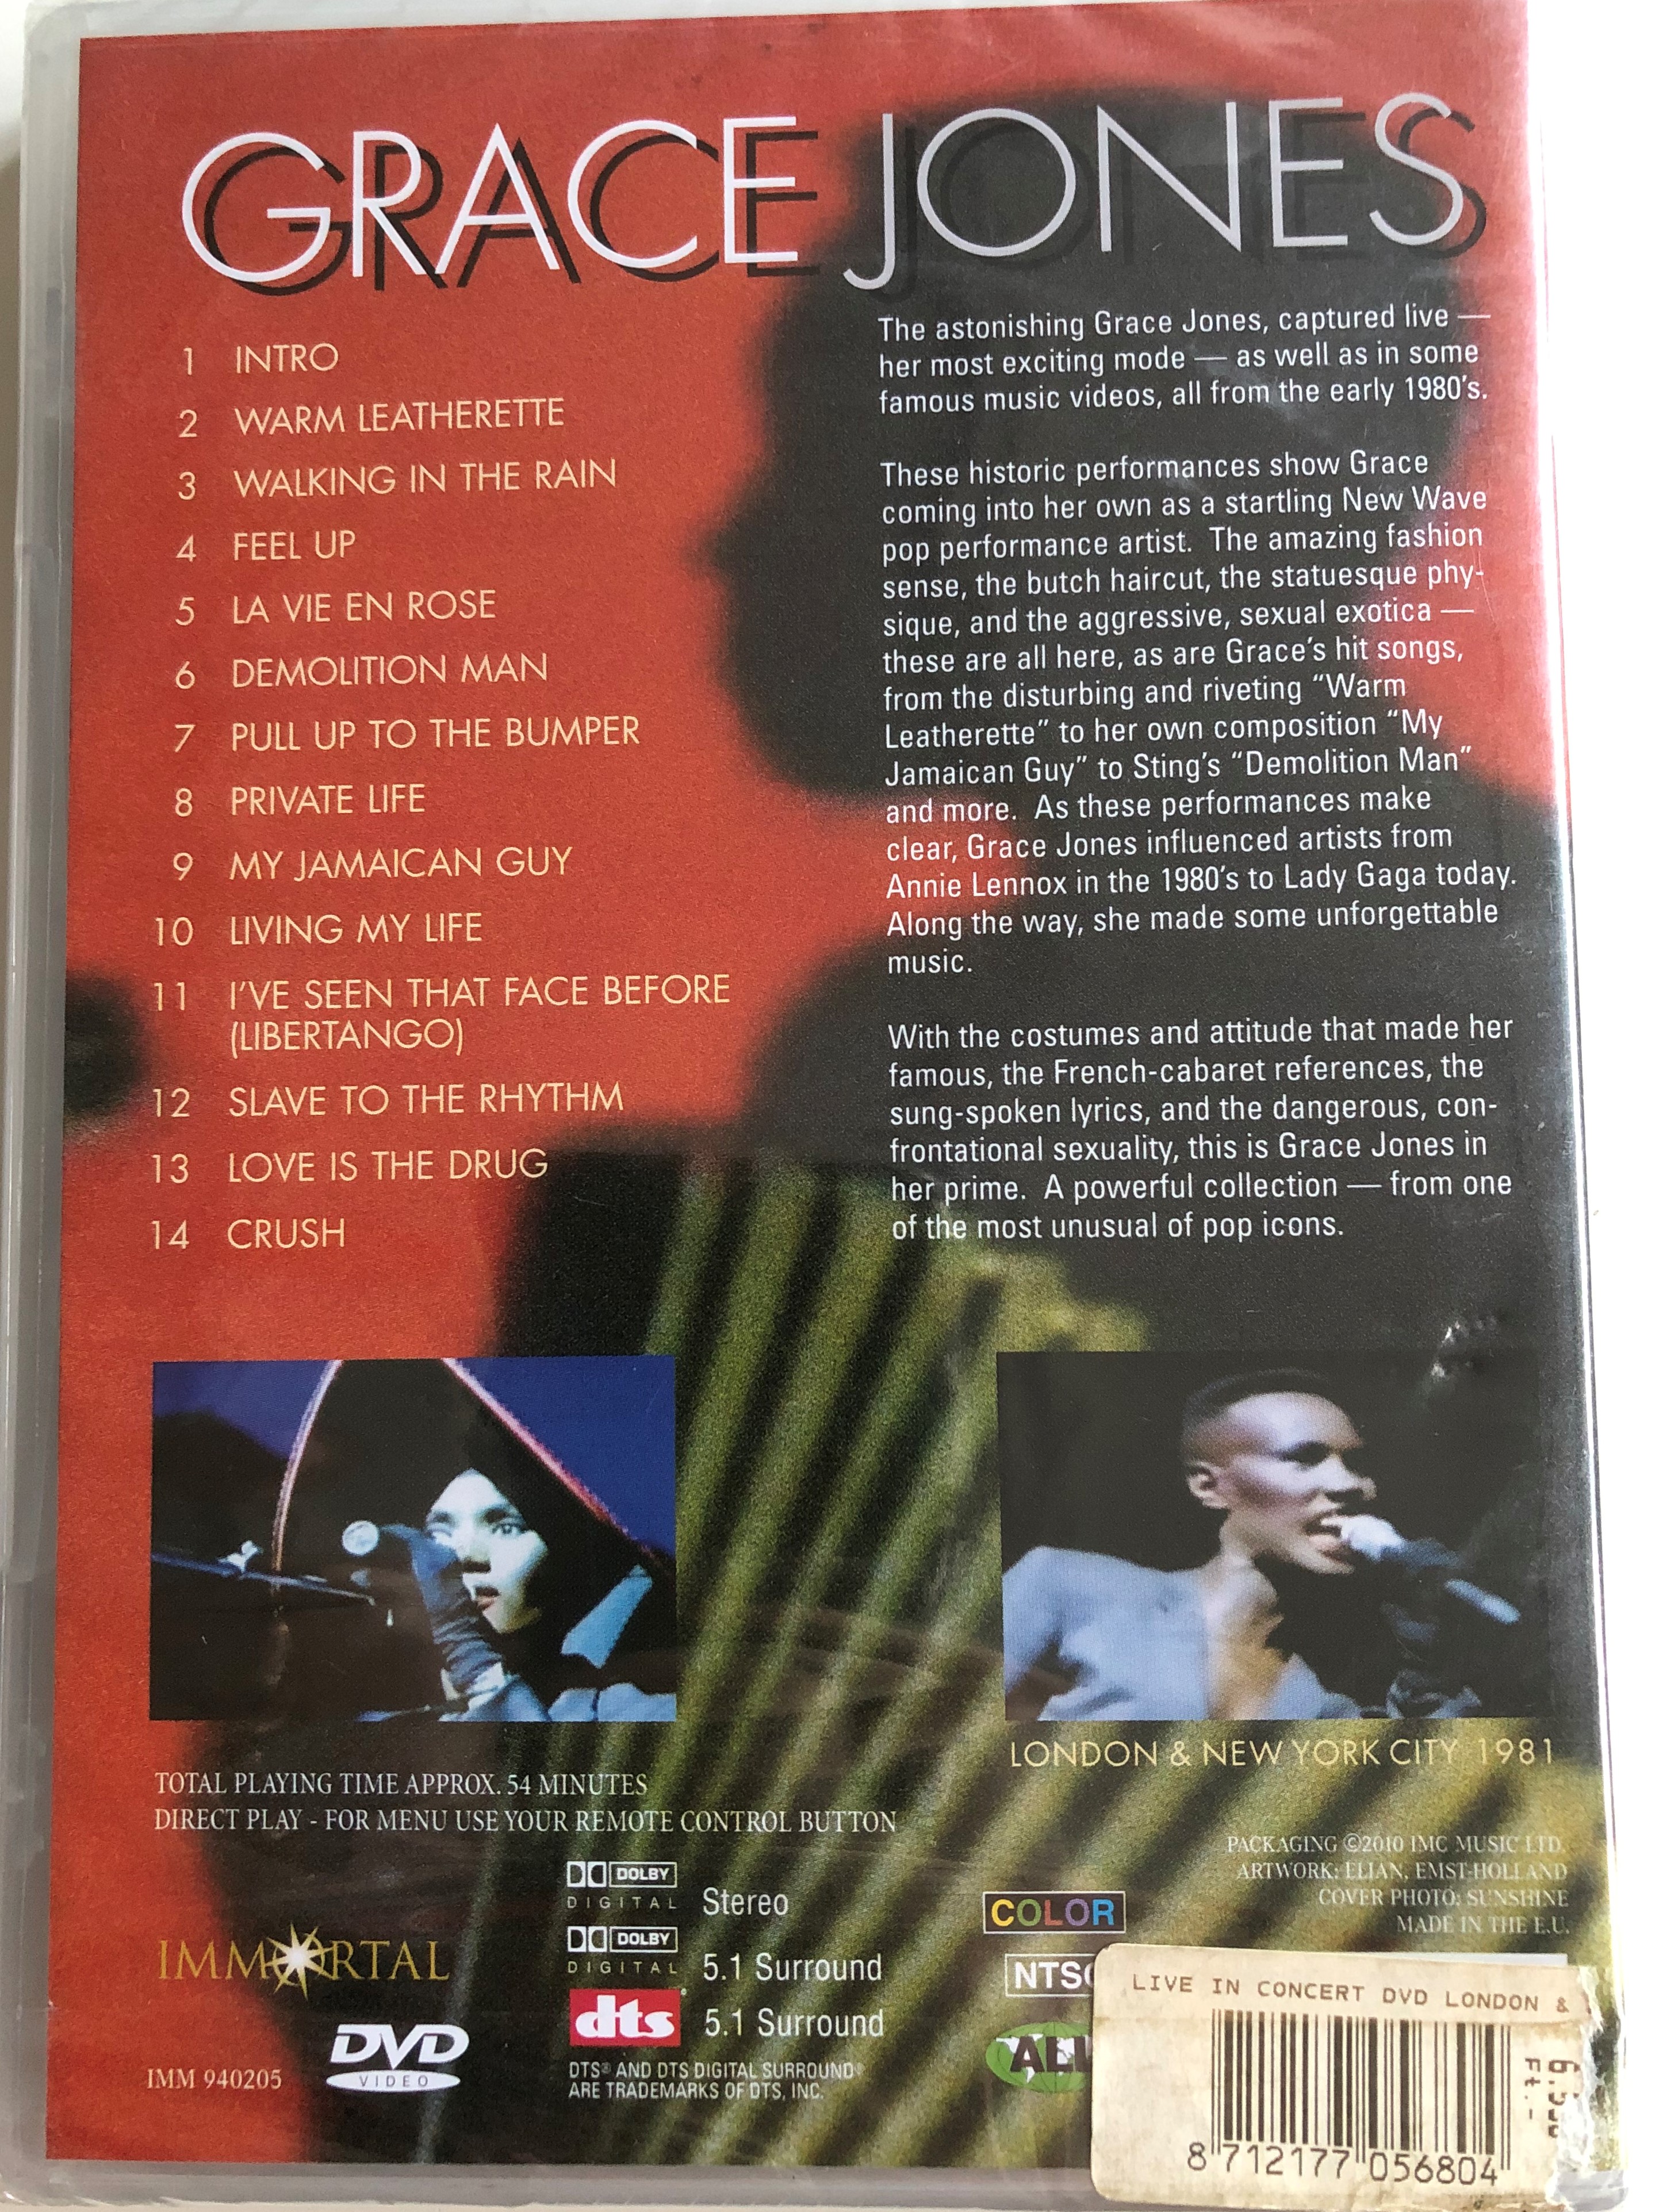 Grace Jones Live in concert DVD 2010 London & New York City 1.JPG